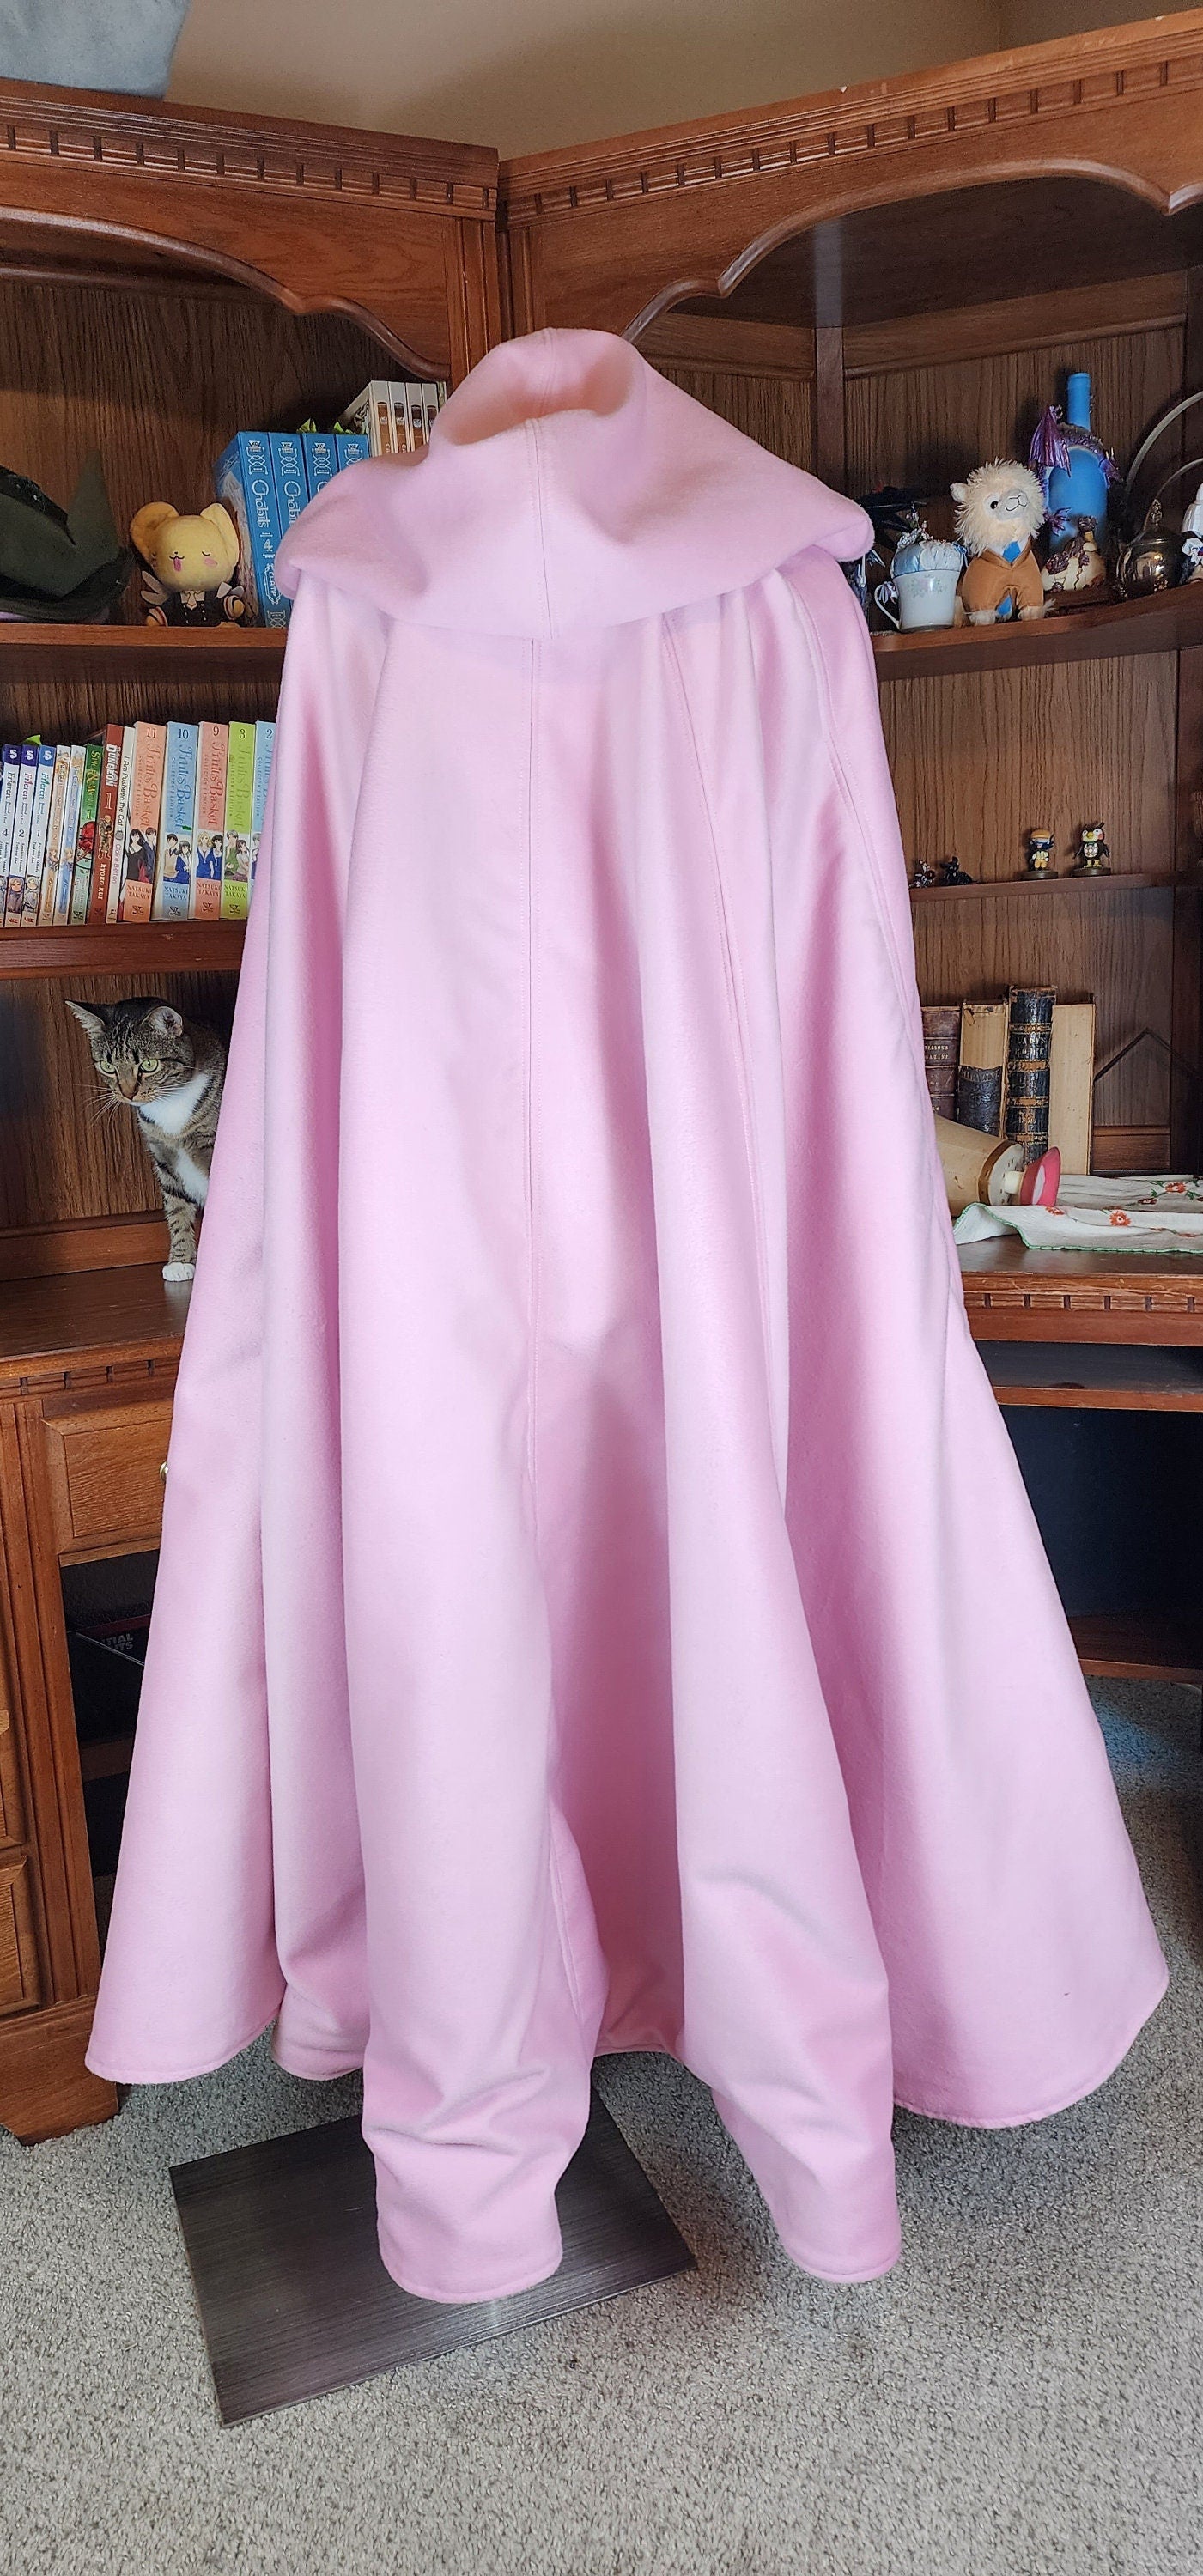 Winter Wanderer Cloak- Bubblegum Pink cloak with Blue water resistant lining